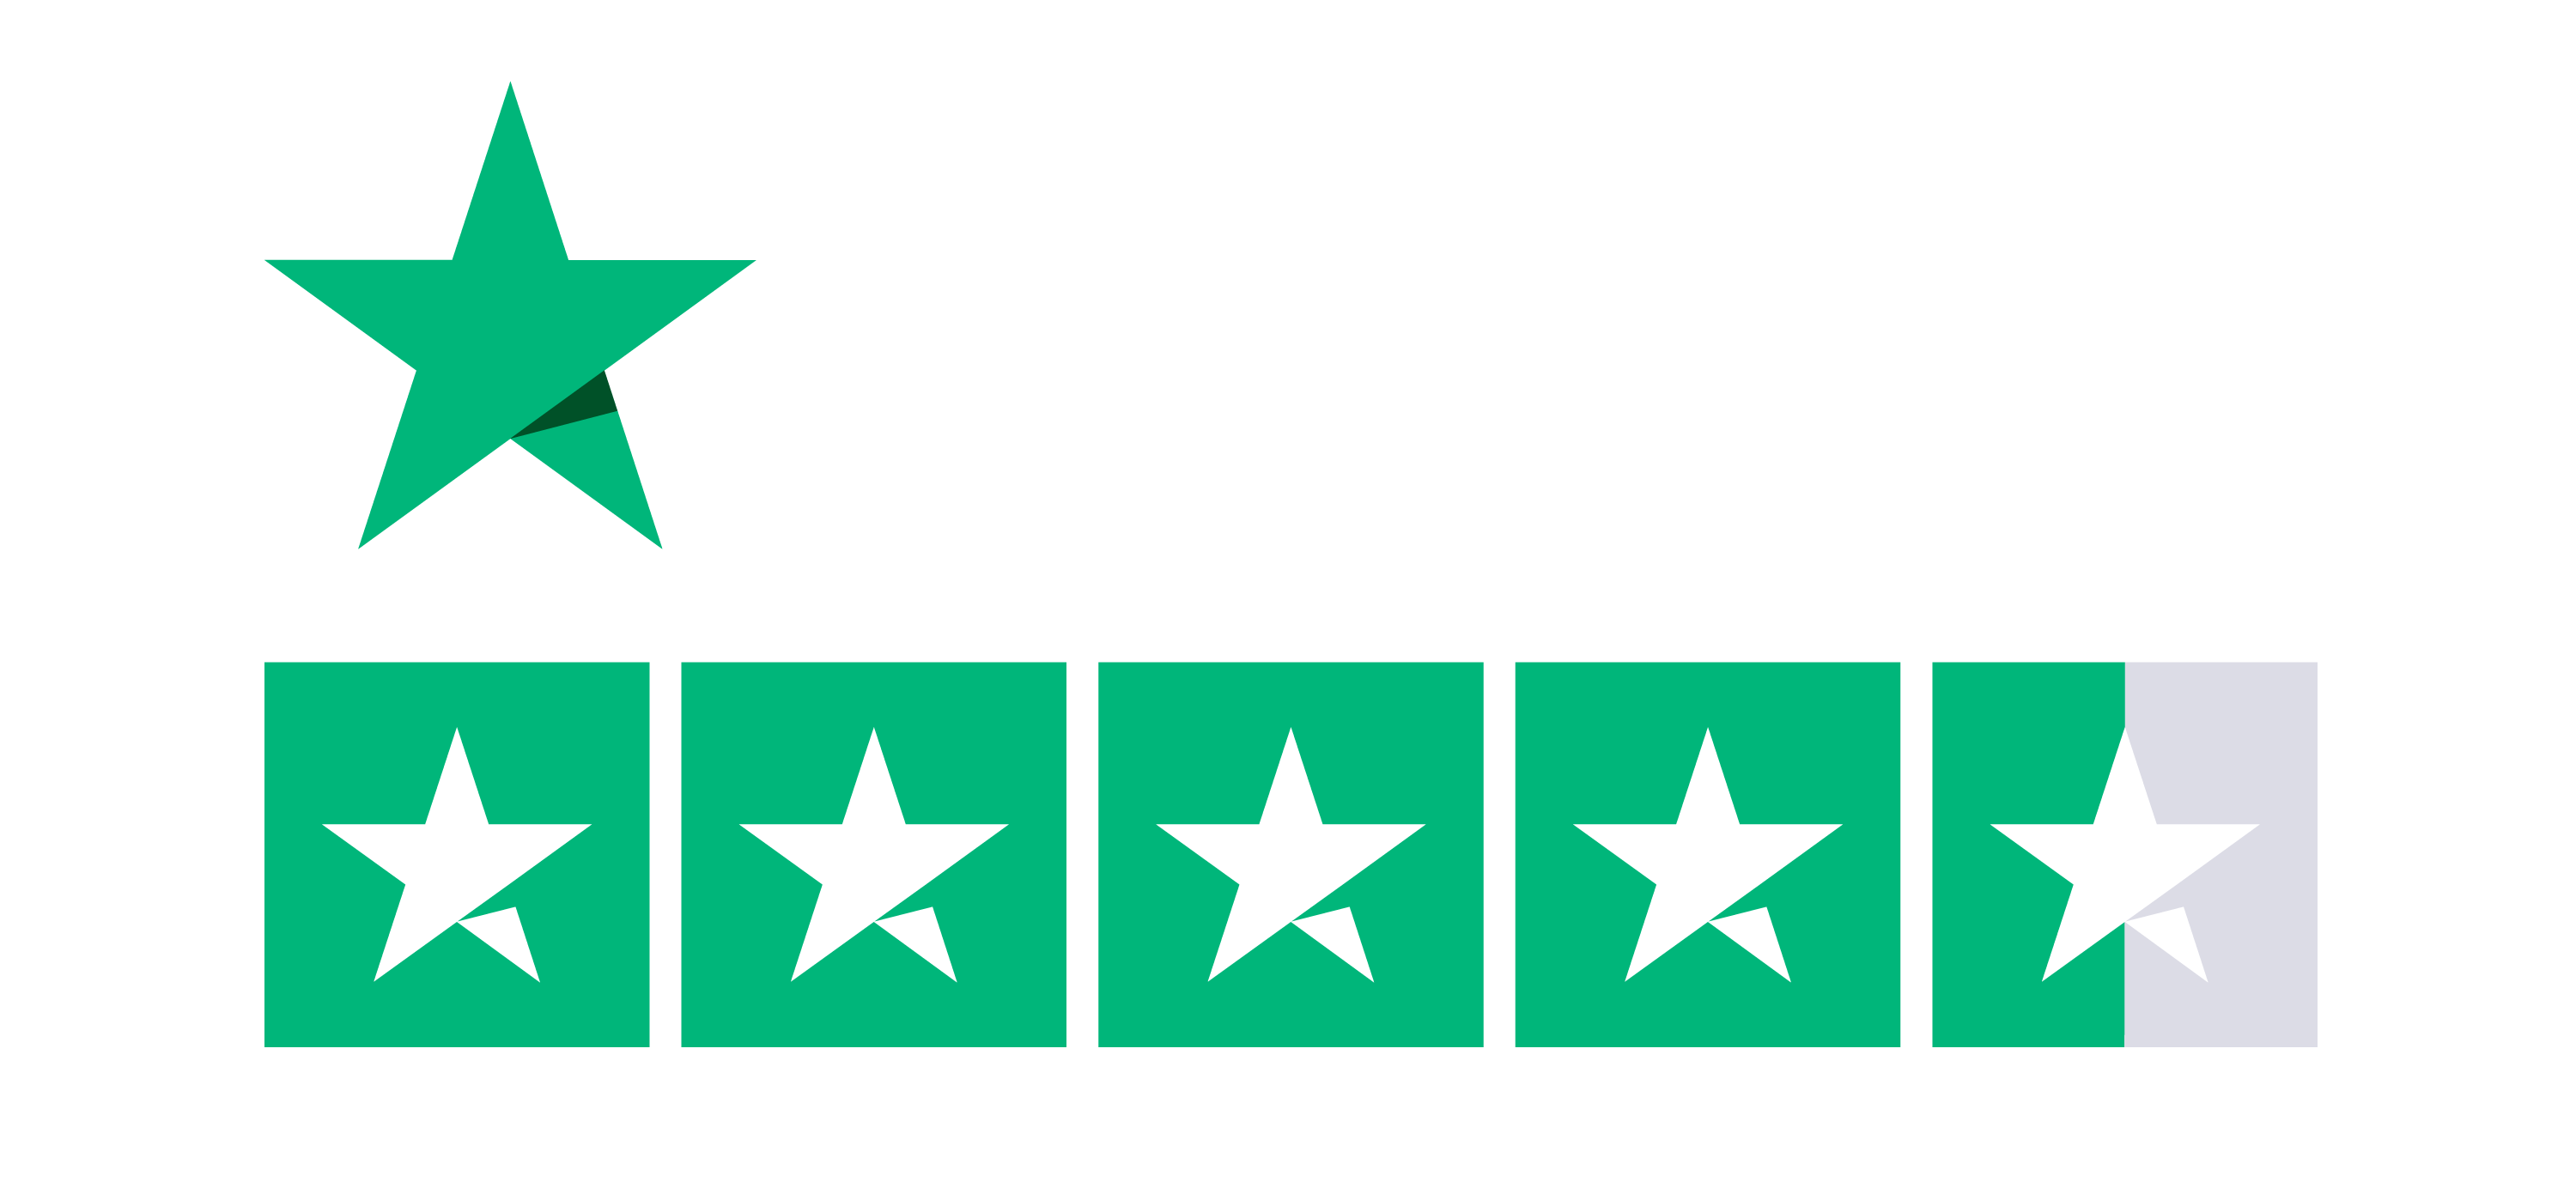 Trustpilot score